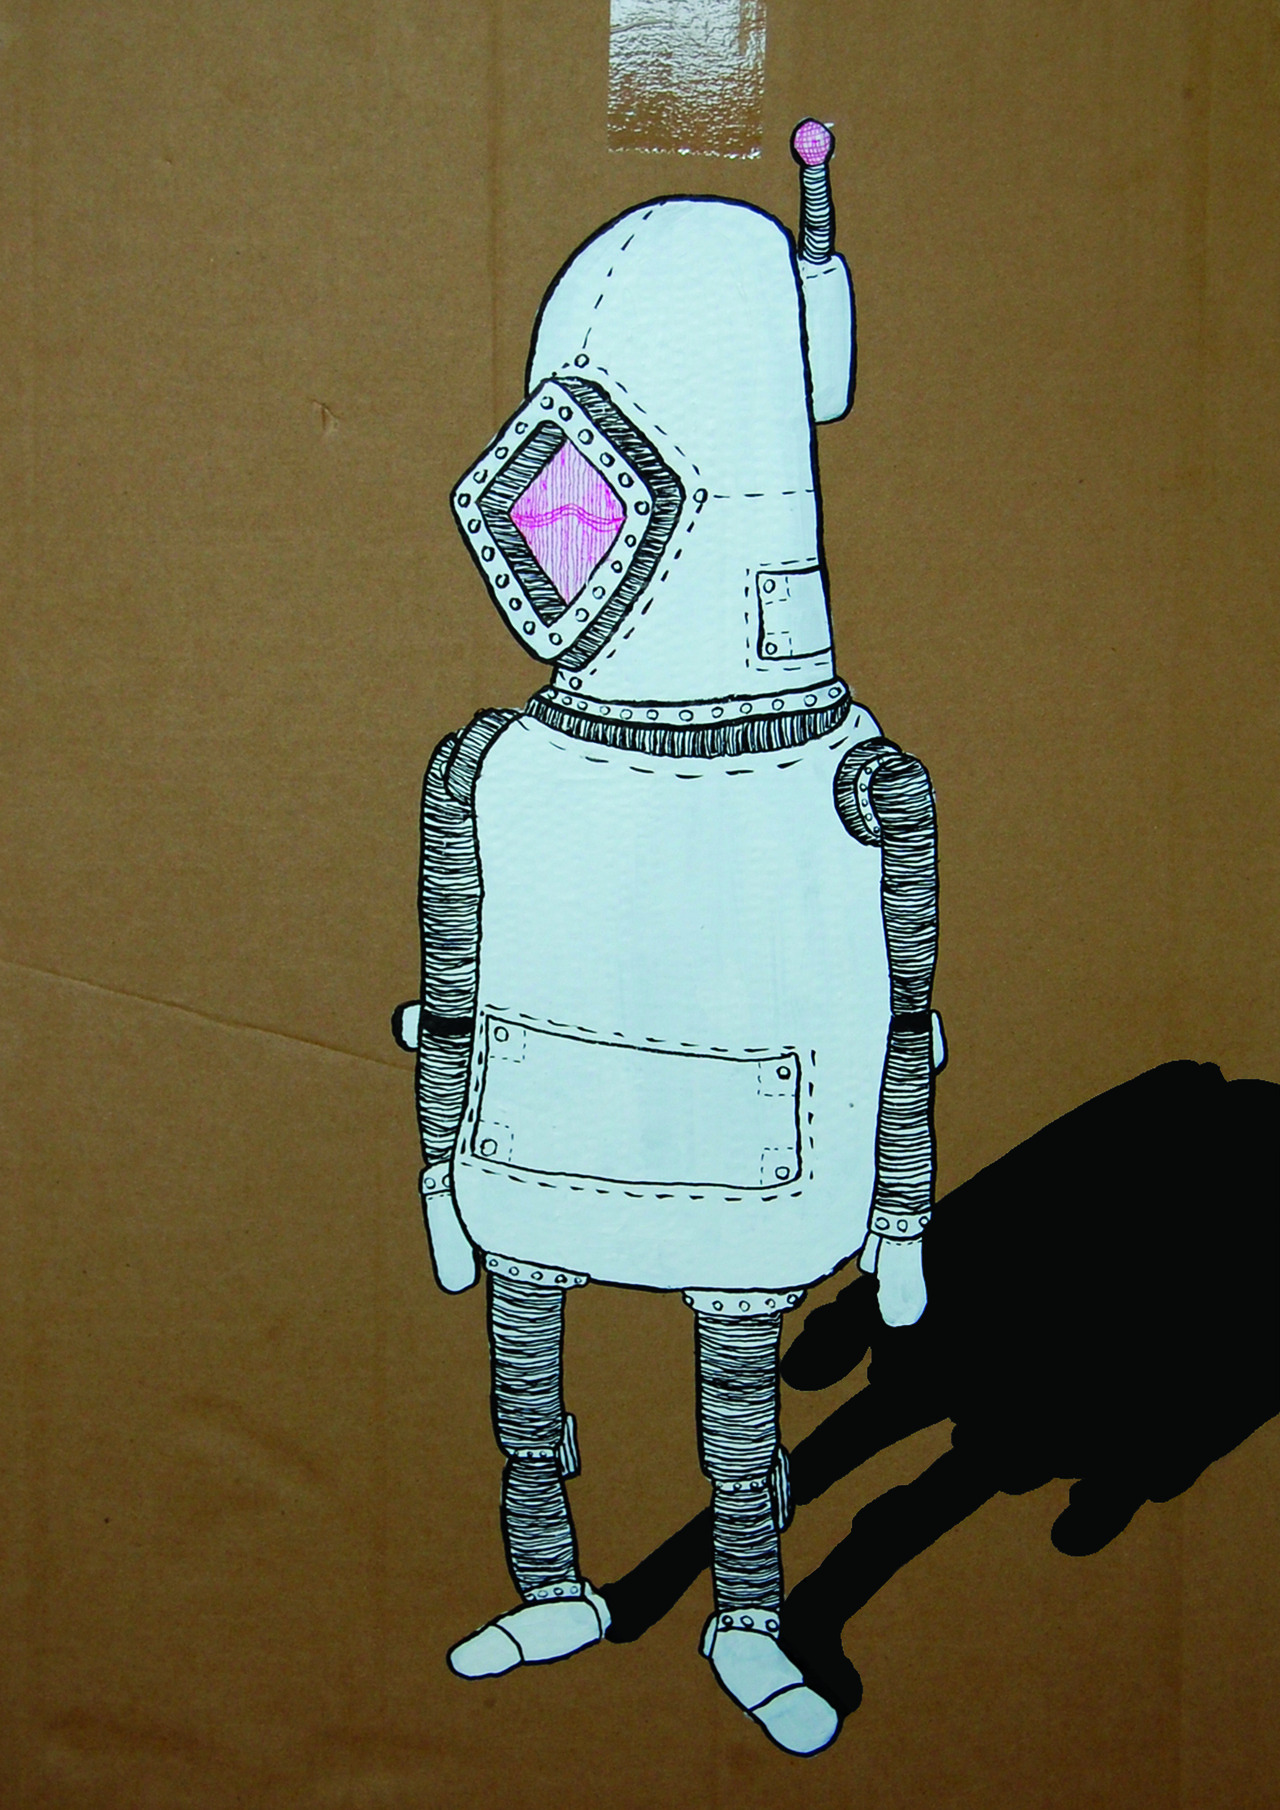 Acyrlic on cardboard. To see more work visit my tumblr